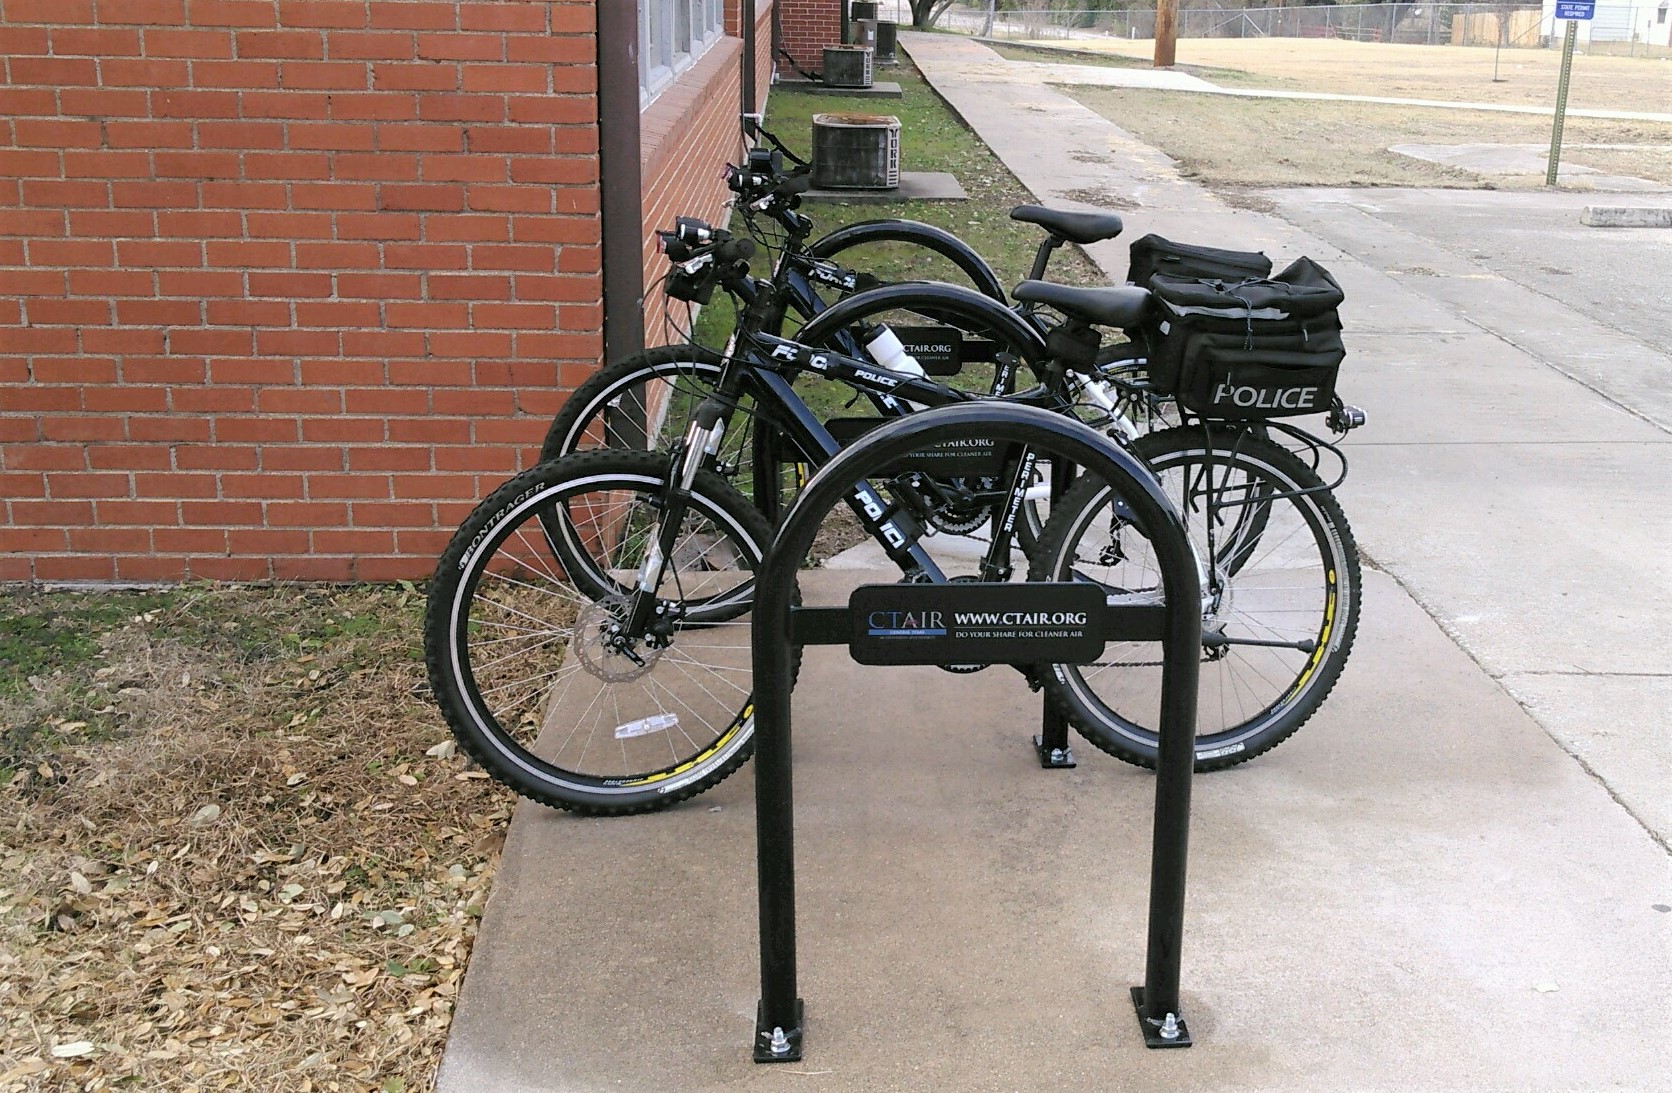 Custom Bike Racks Used by Texas Group as a Strategy to Help Reduce Ozone Levels